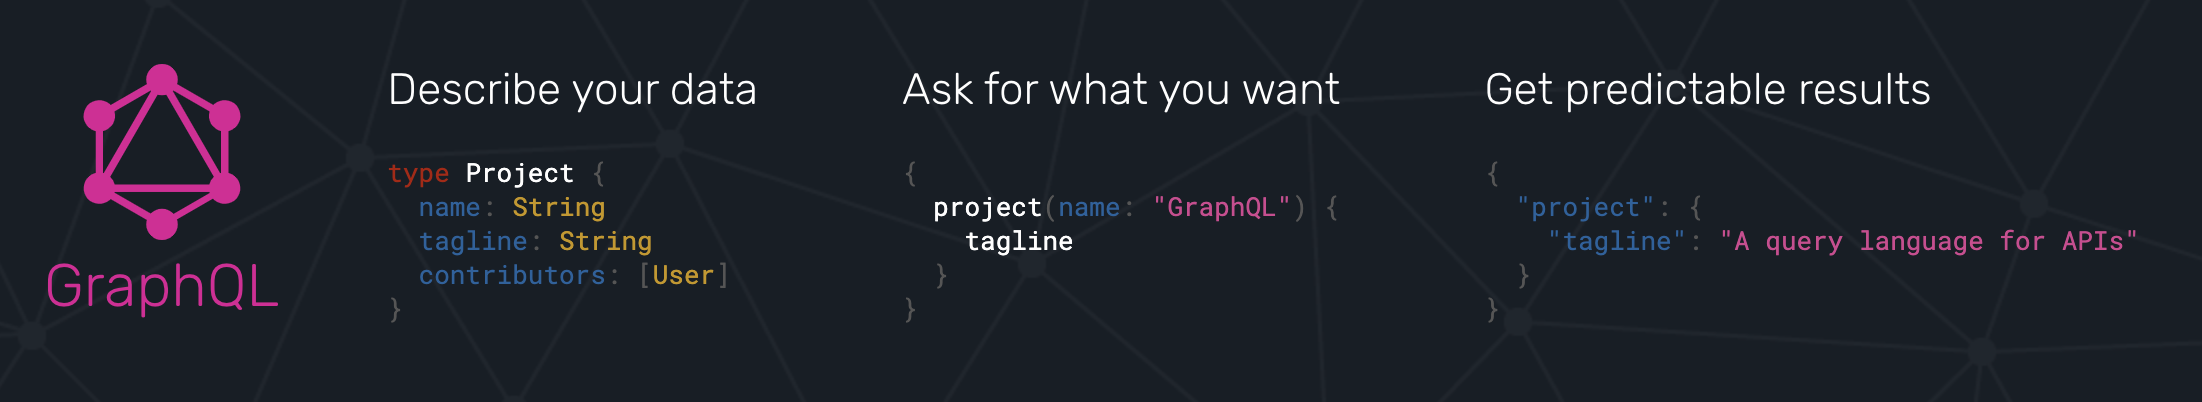 GraphQL Overview showing an example of describing